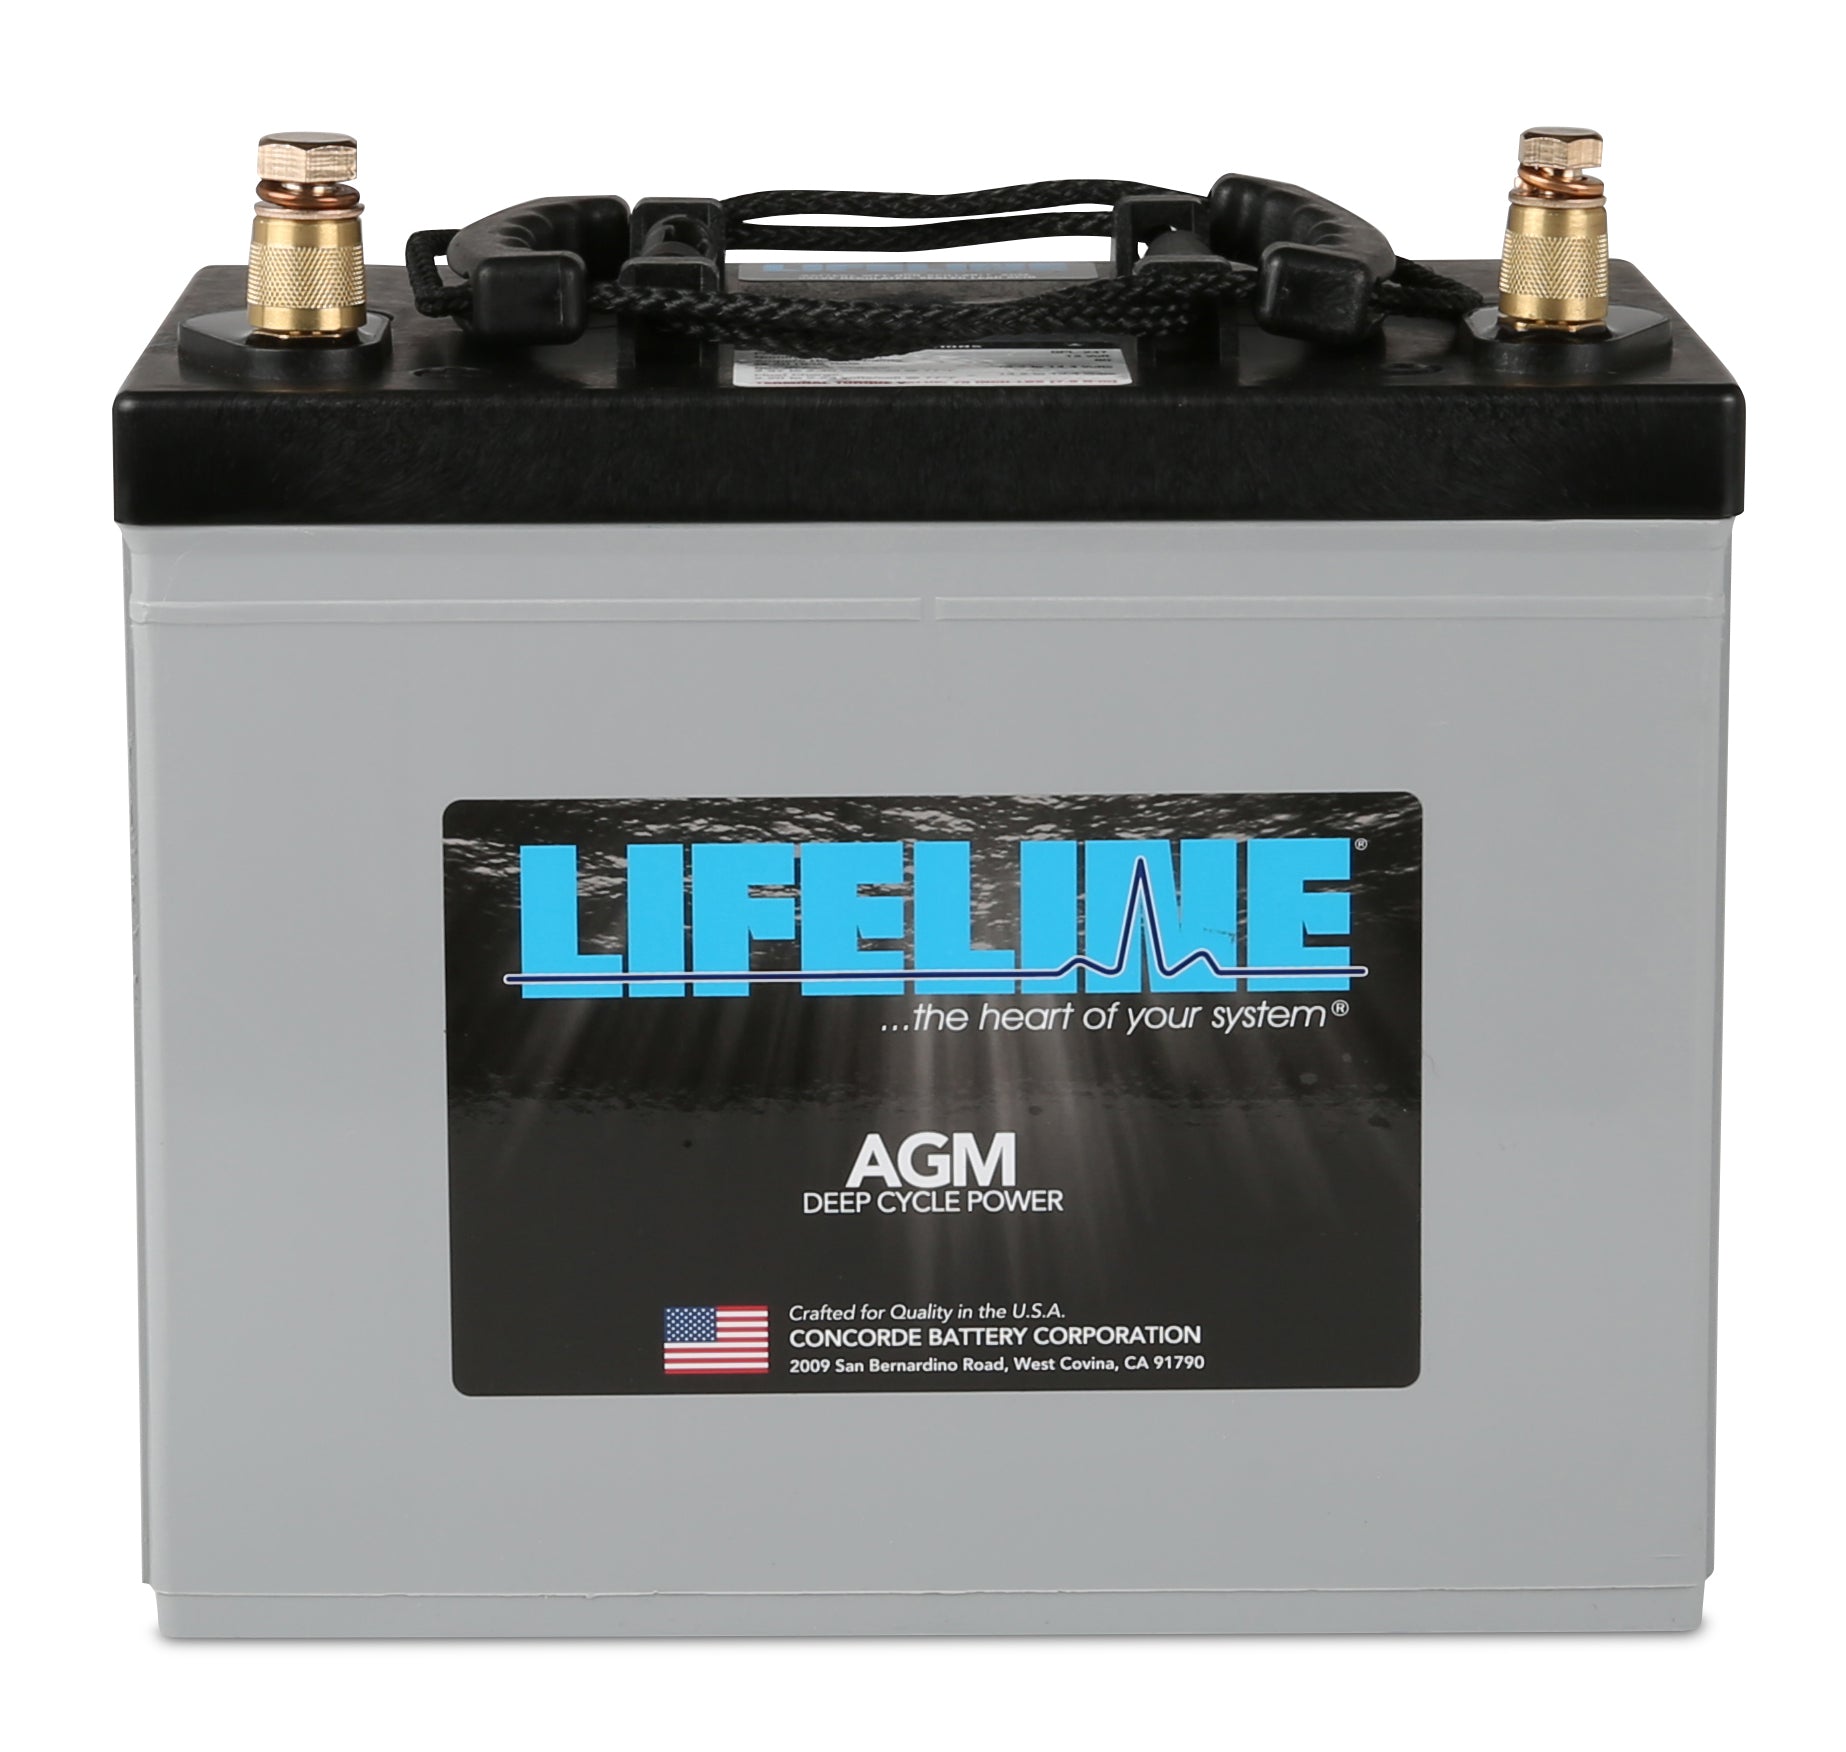 Lifeline GPL-24T - 12v - 80AH Deep Cycle Battery (FREE SHIPPING)